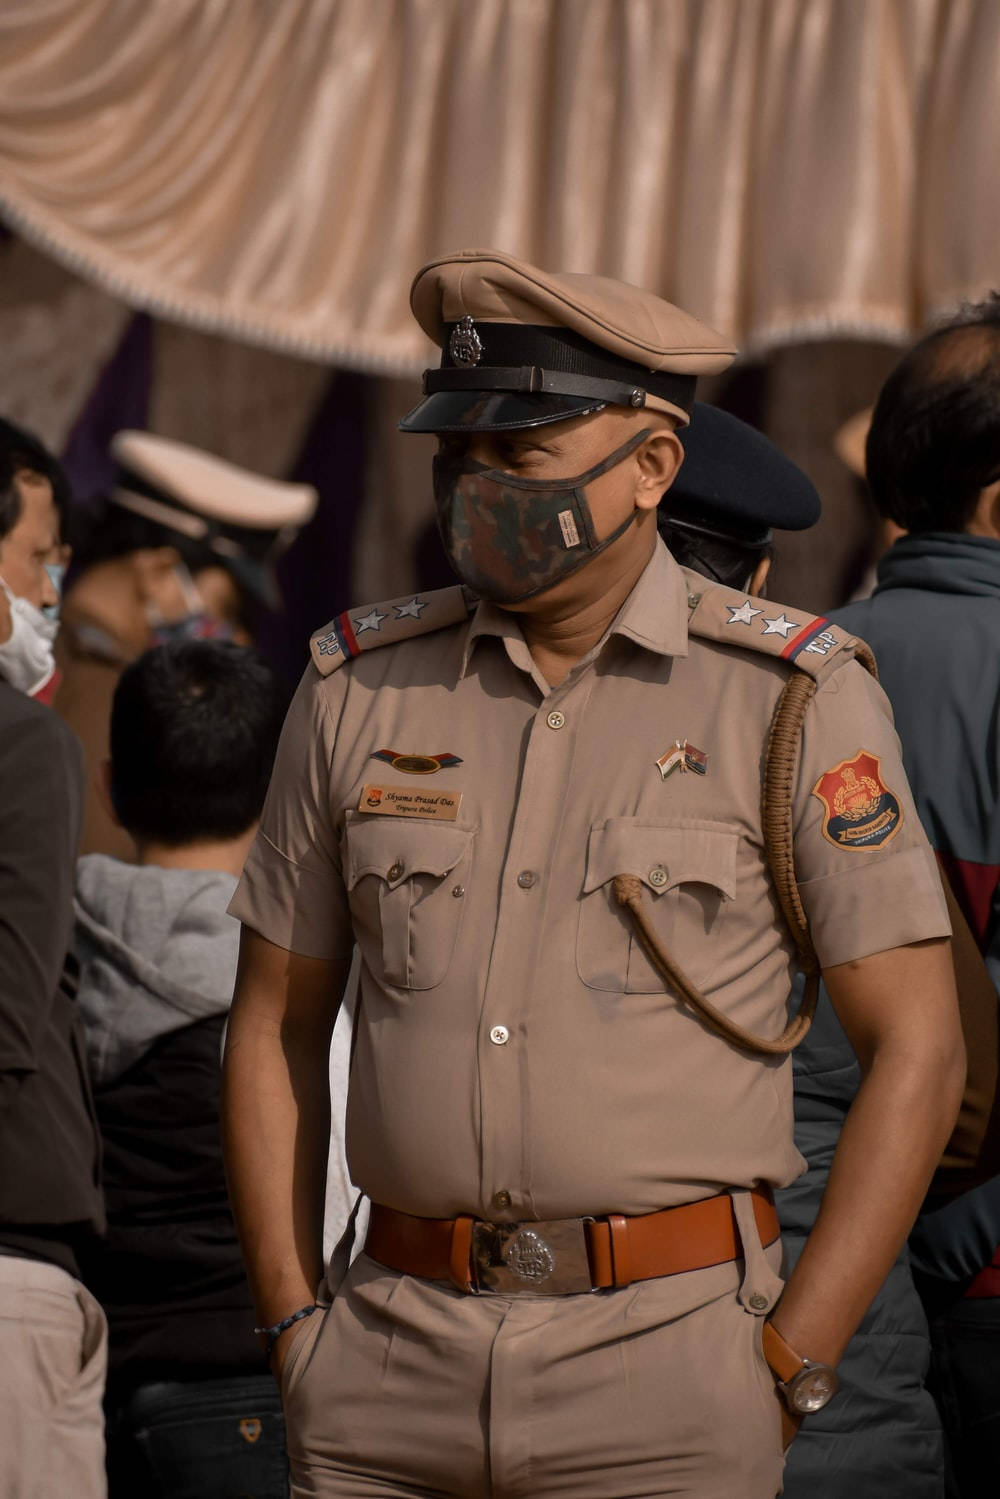 Caption: Indian Police Commander In Uniform Wallpaper